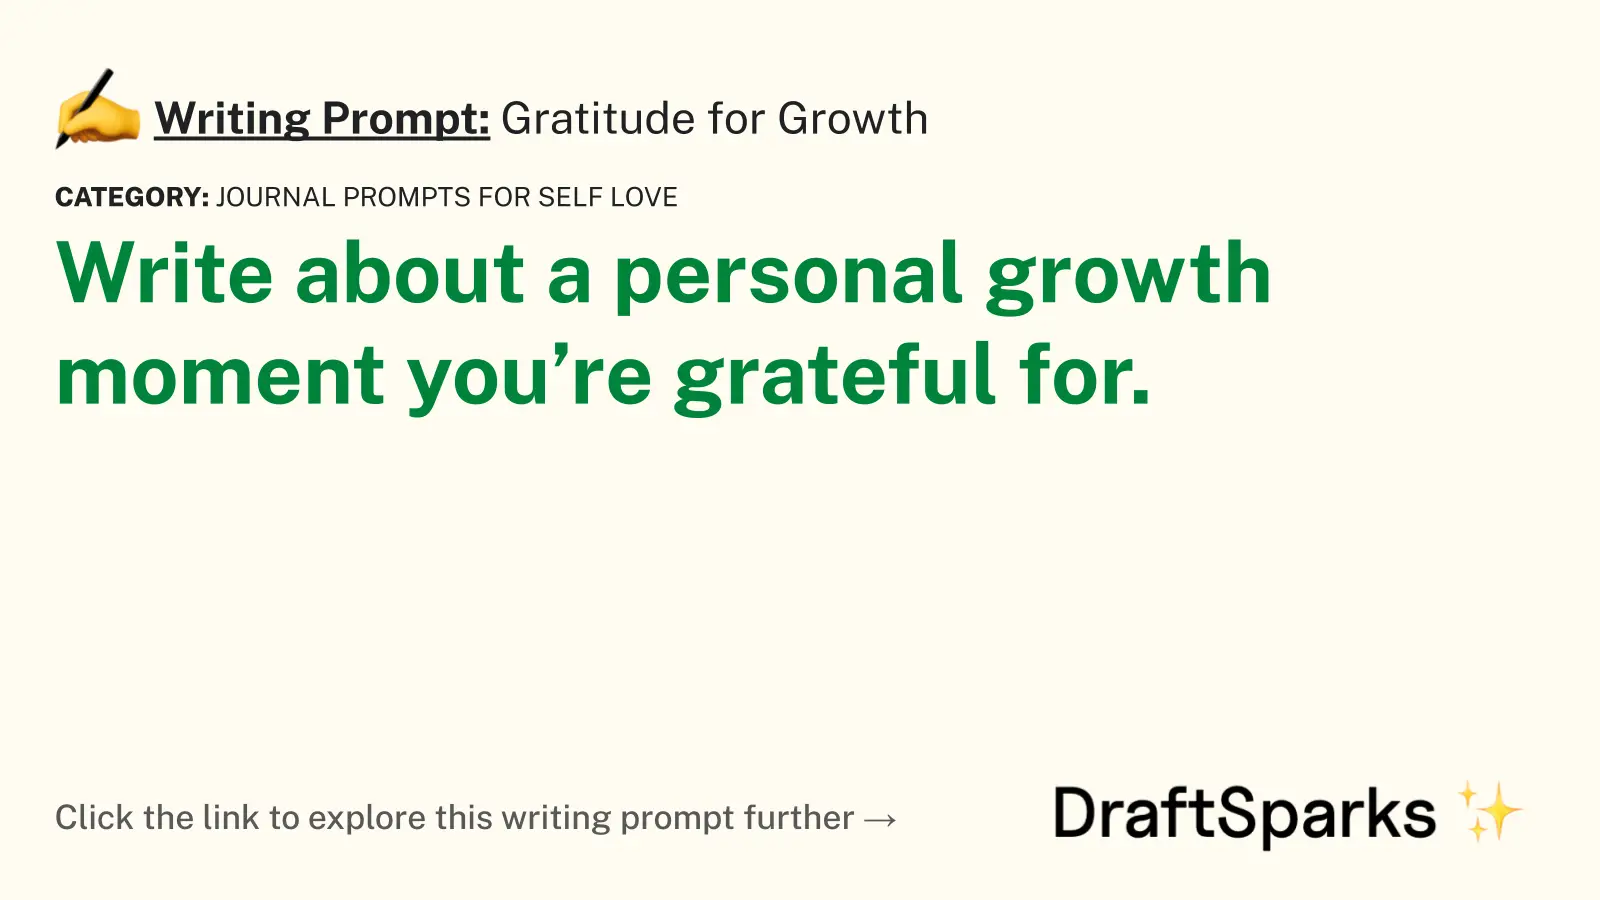 Gratitude for Growth